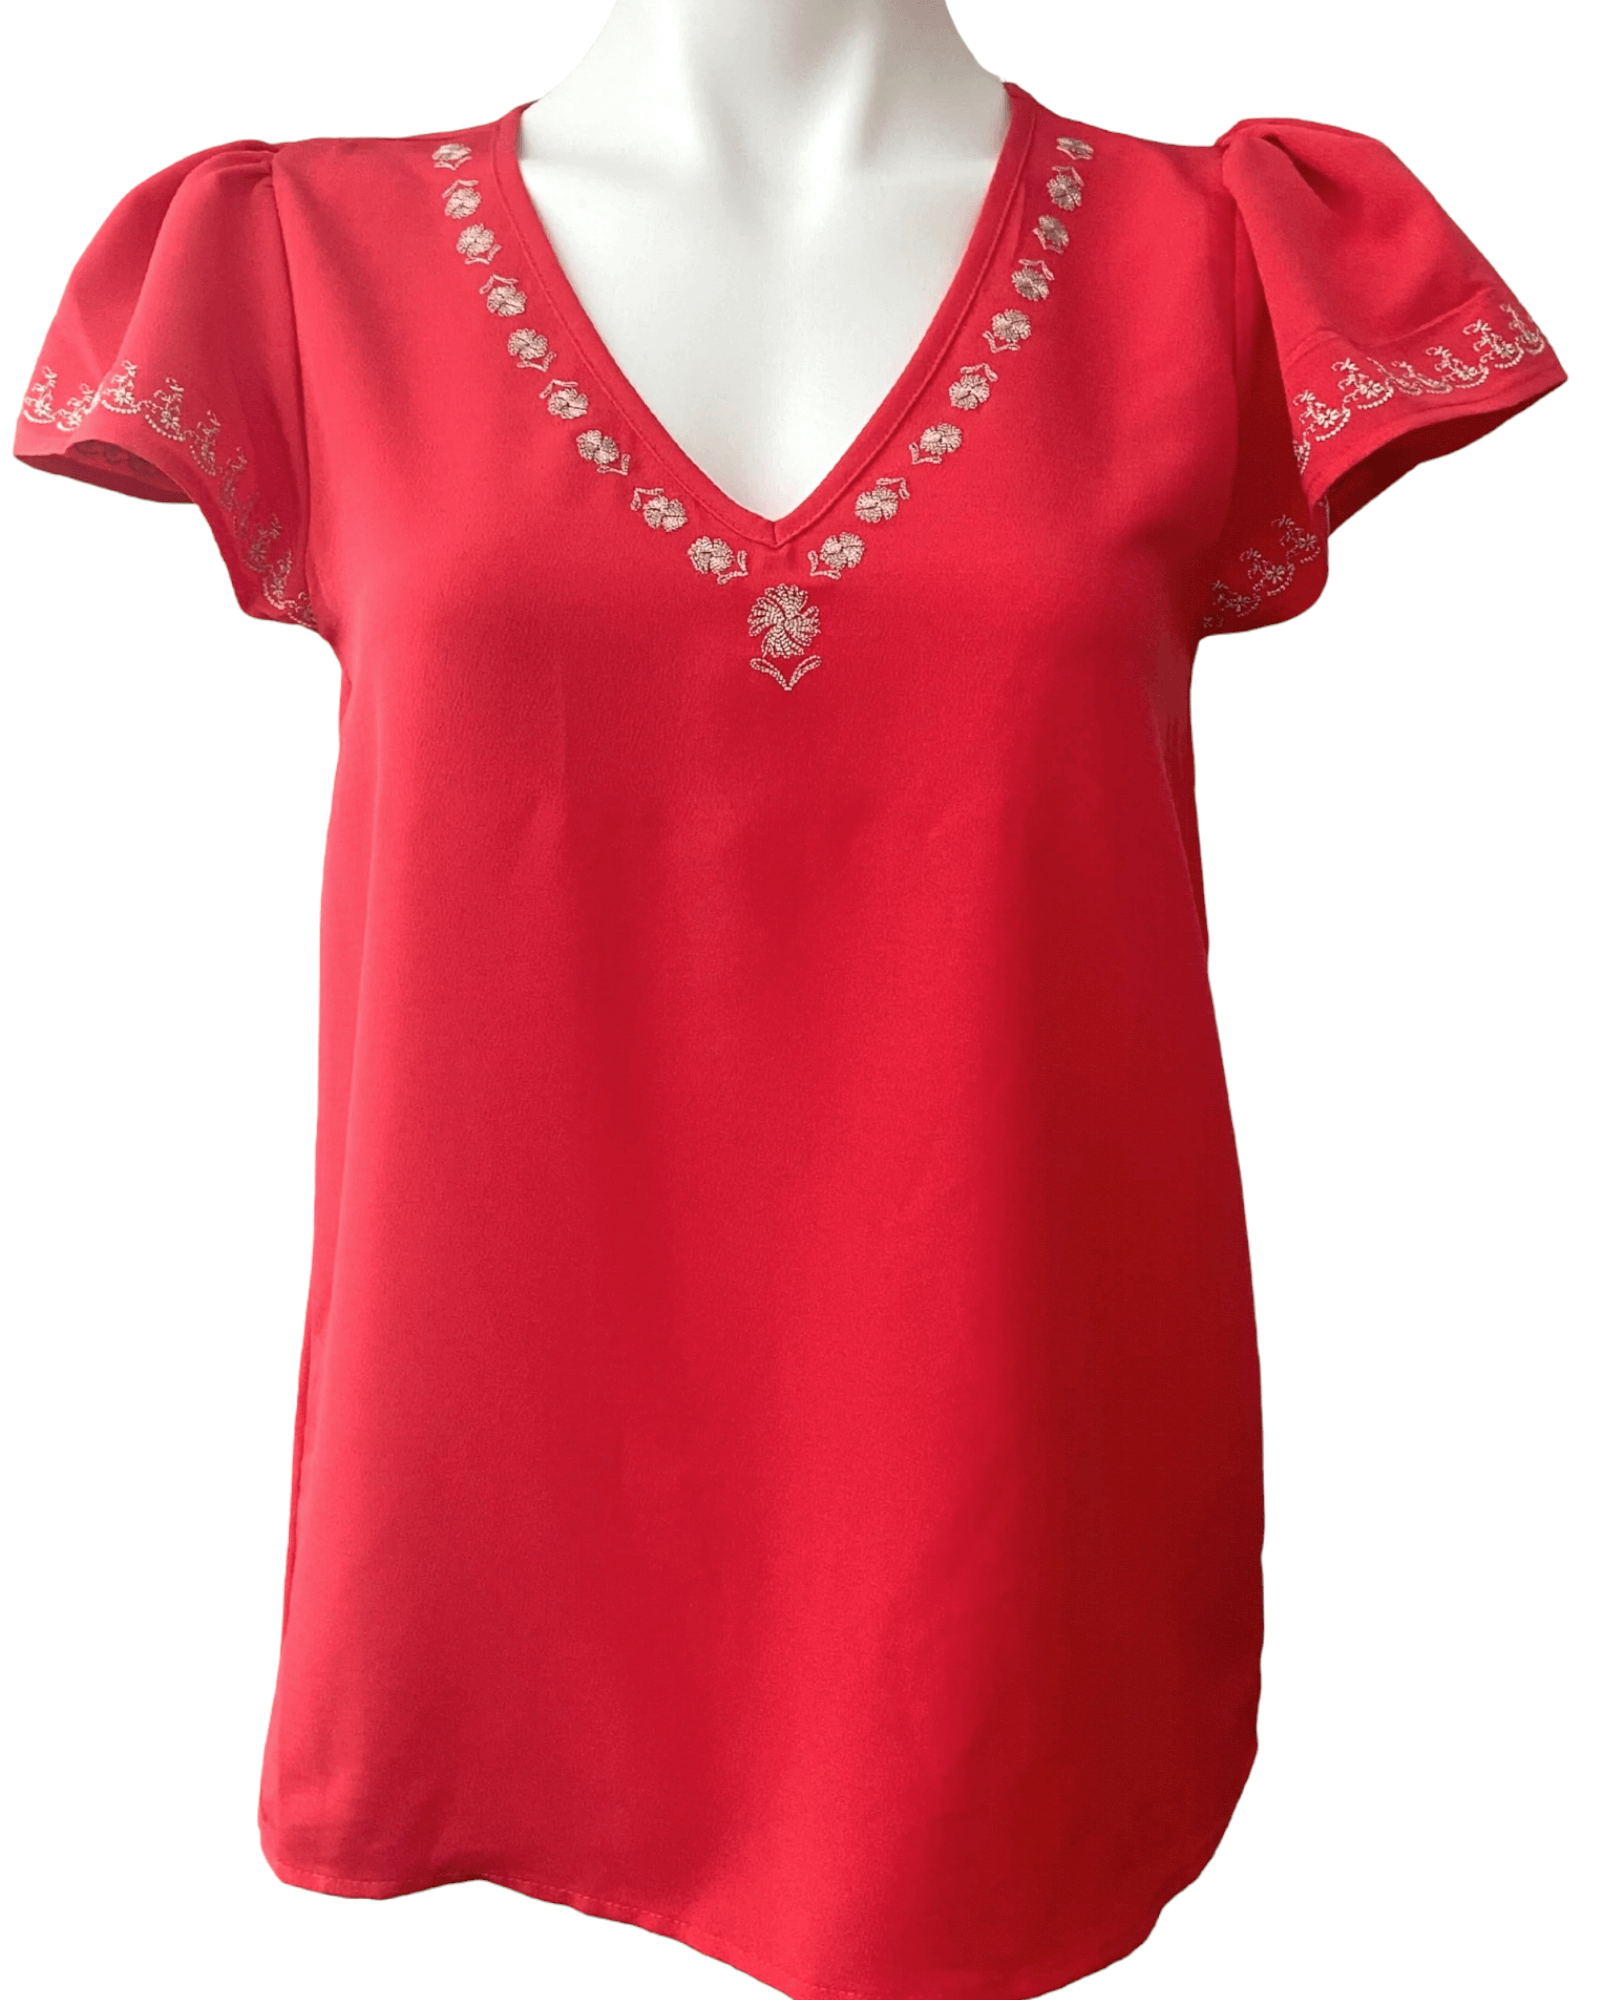 Warm Sprint BOBEAU embroidered flutter sleeve blouse